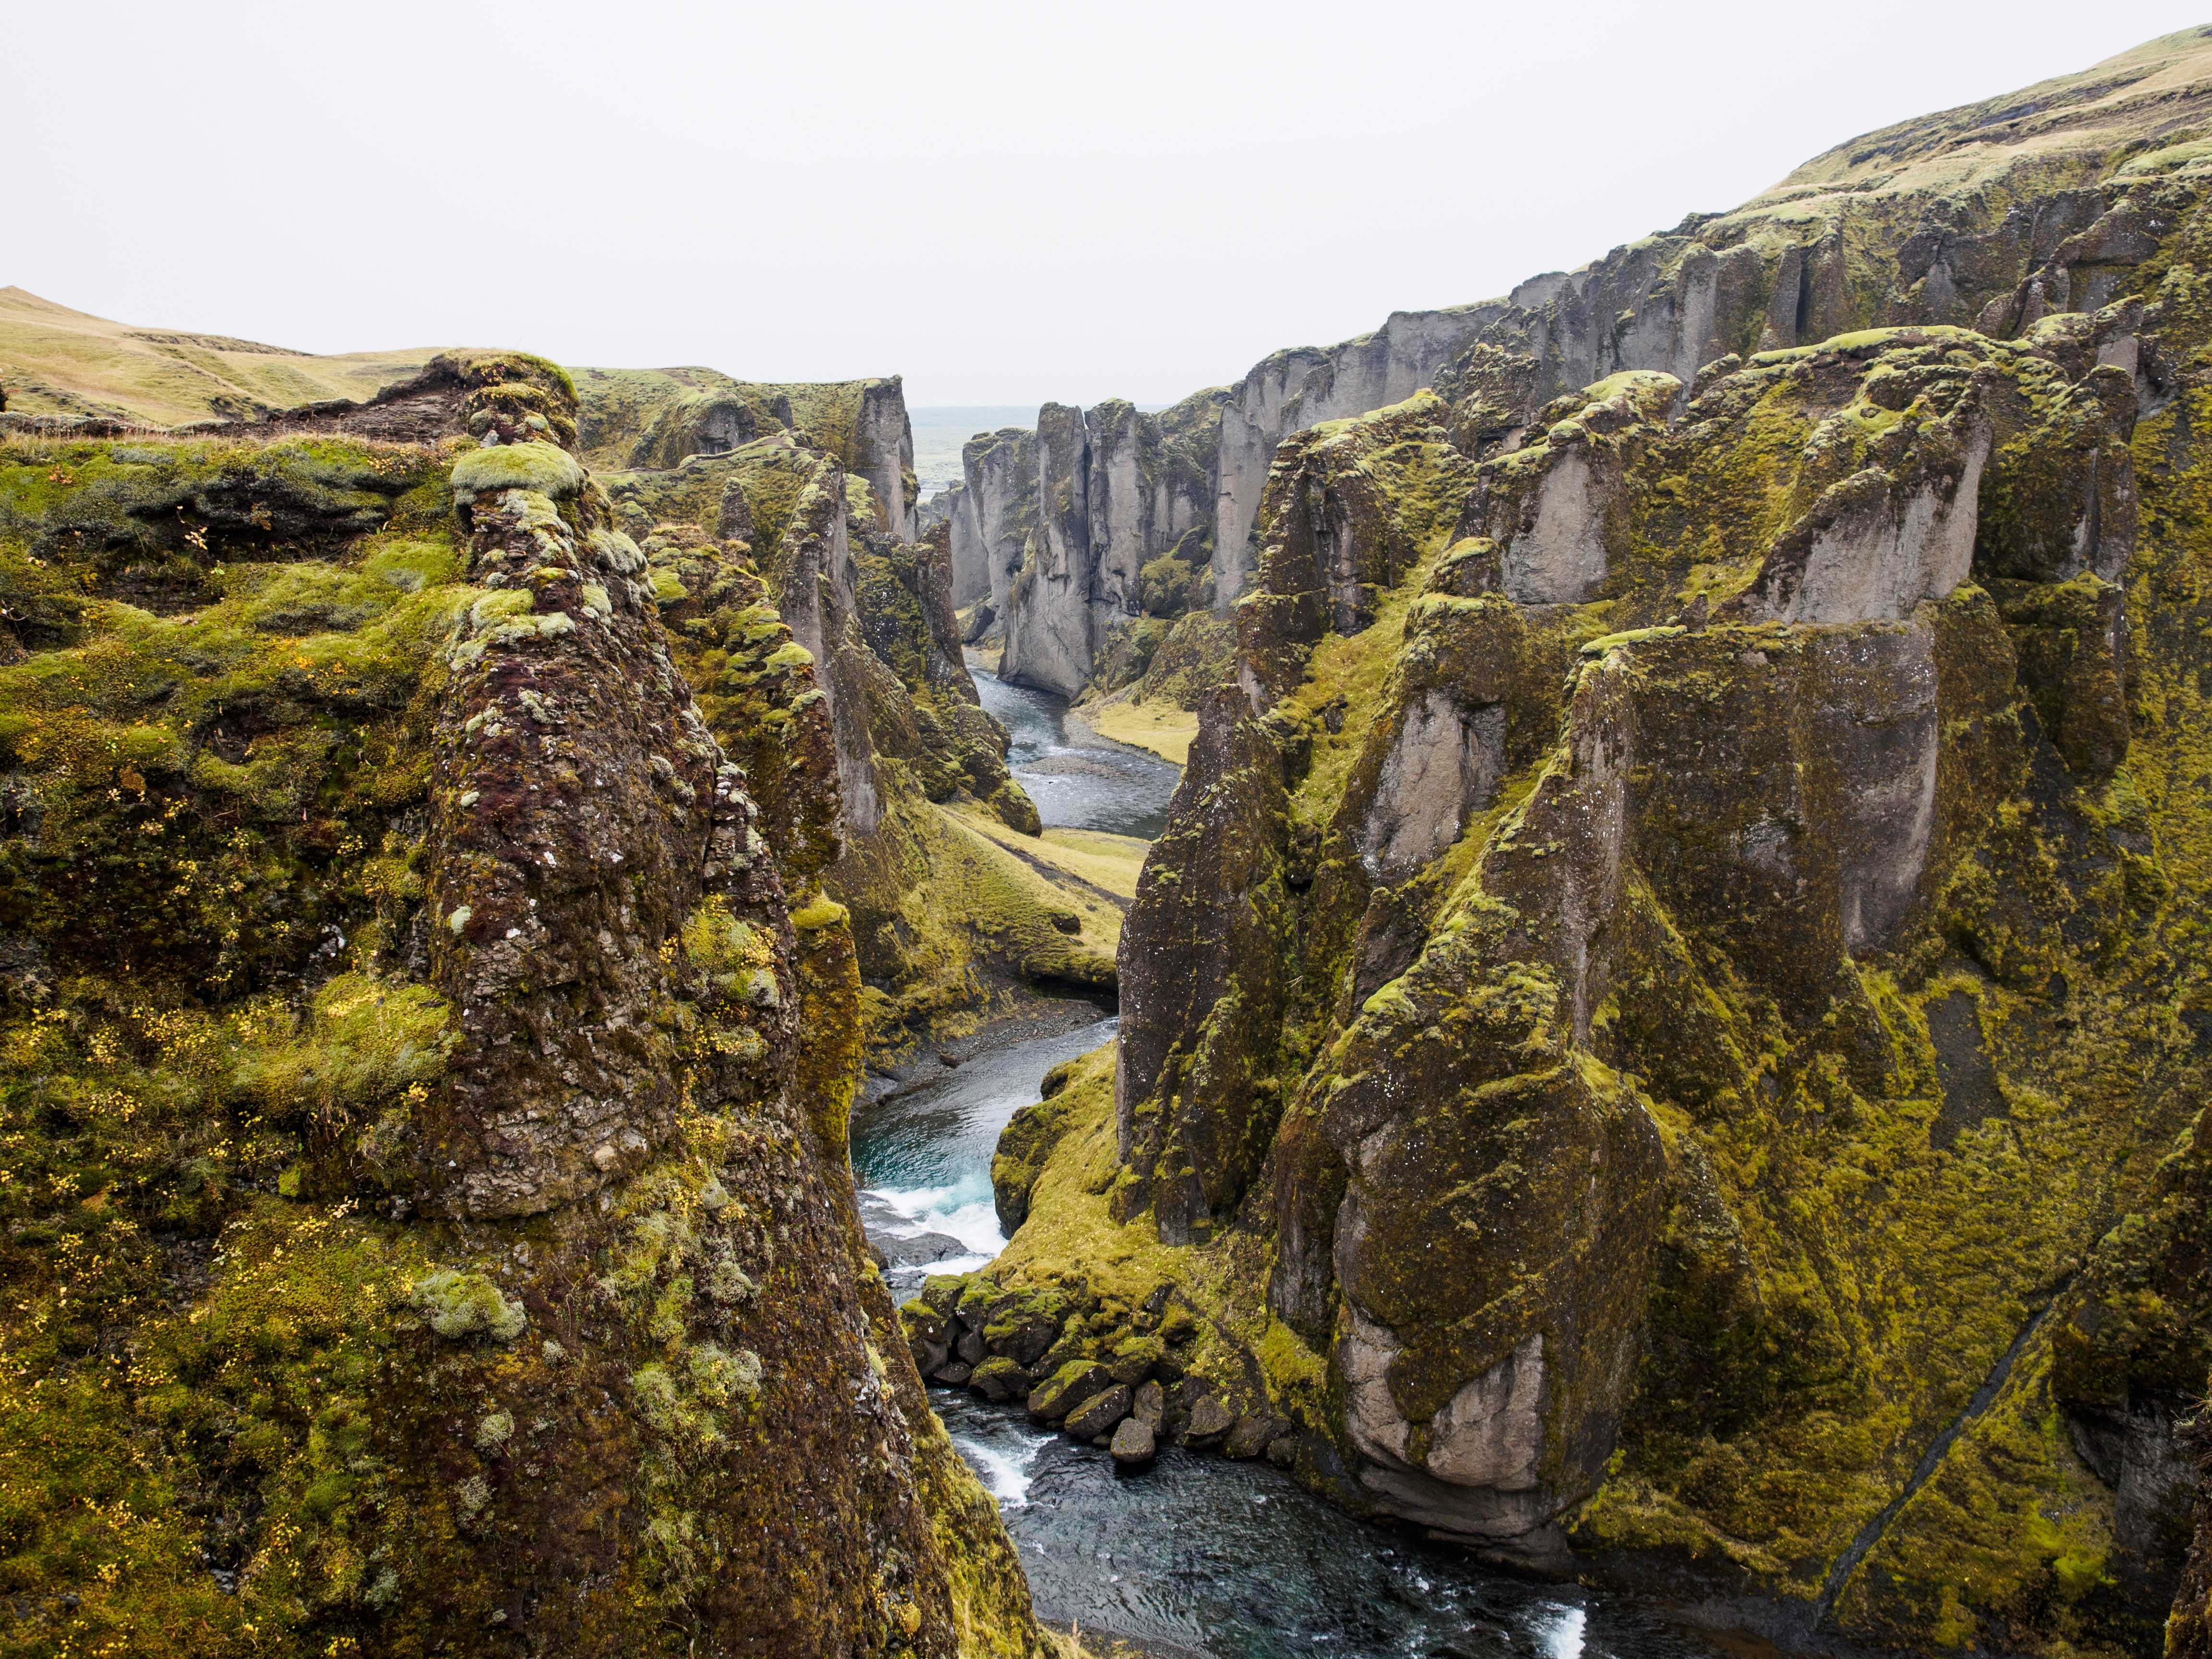 General 4608x3456 river mountains landscape nature valley Iceland rocks cliff moss Fjadrargljufur